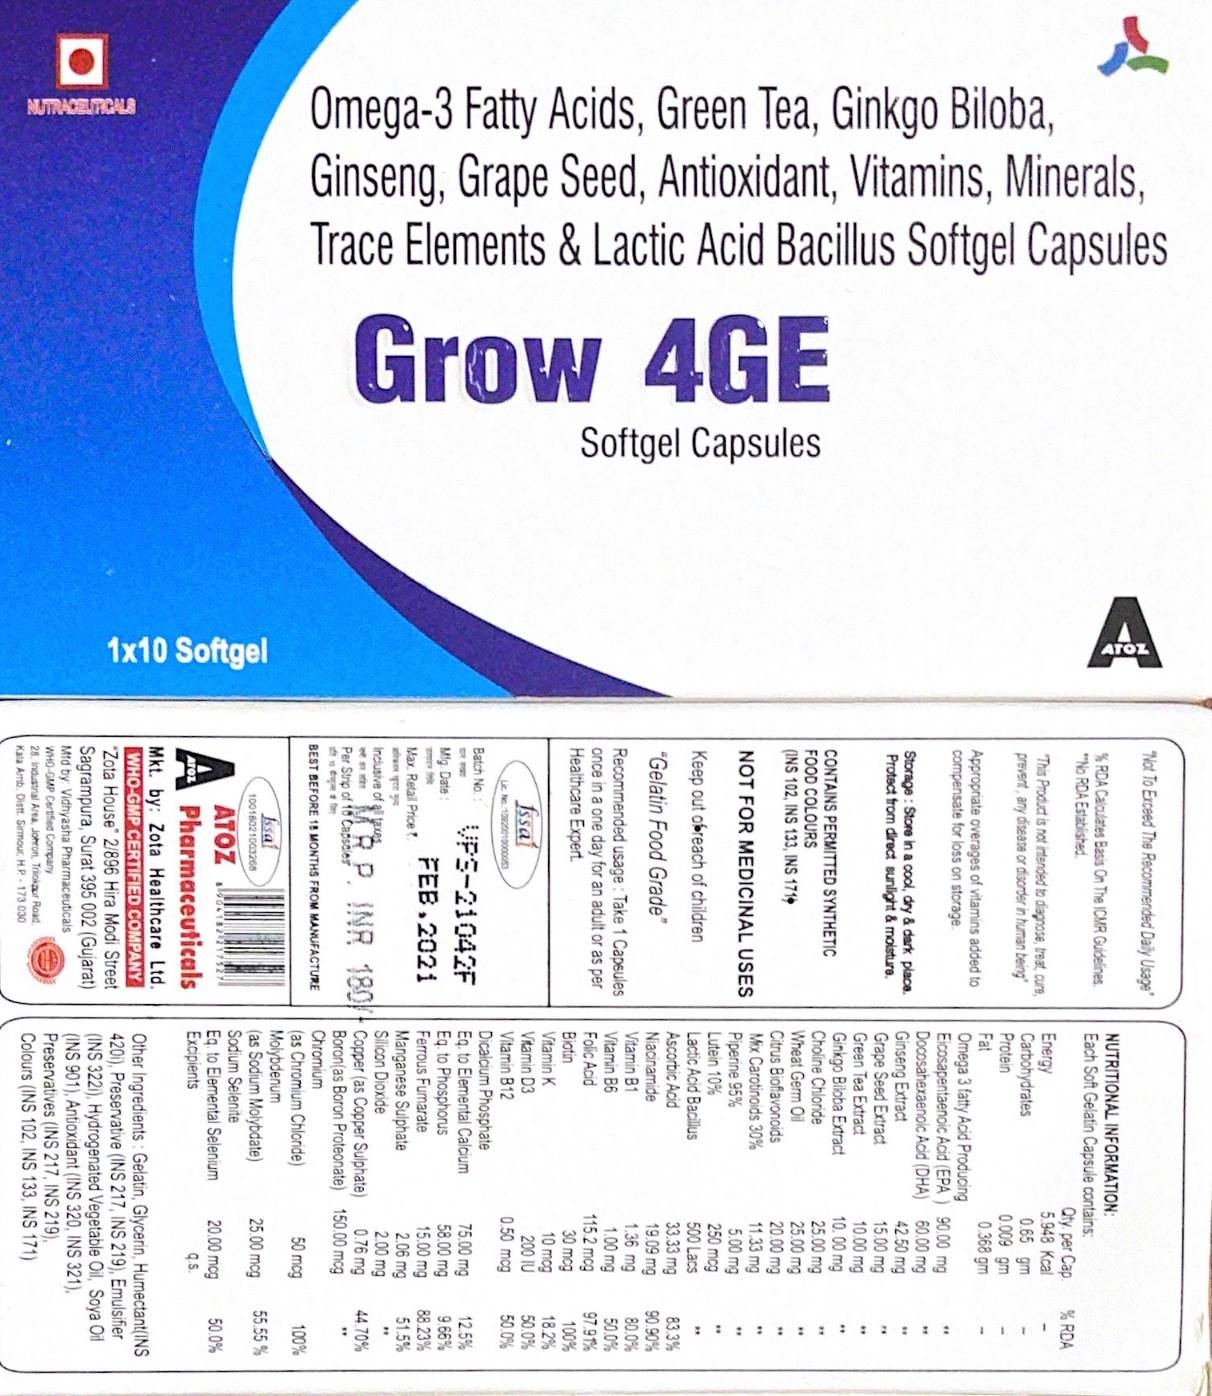 Grow 4ge Softgel Capsules